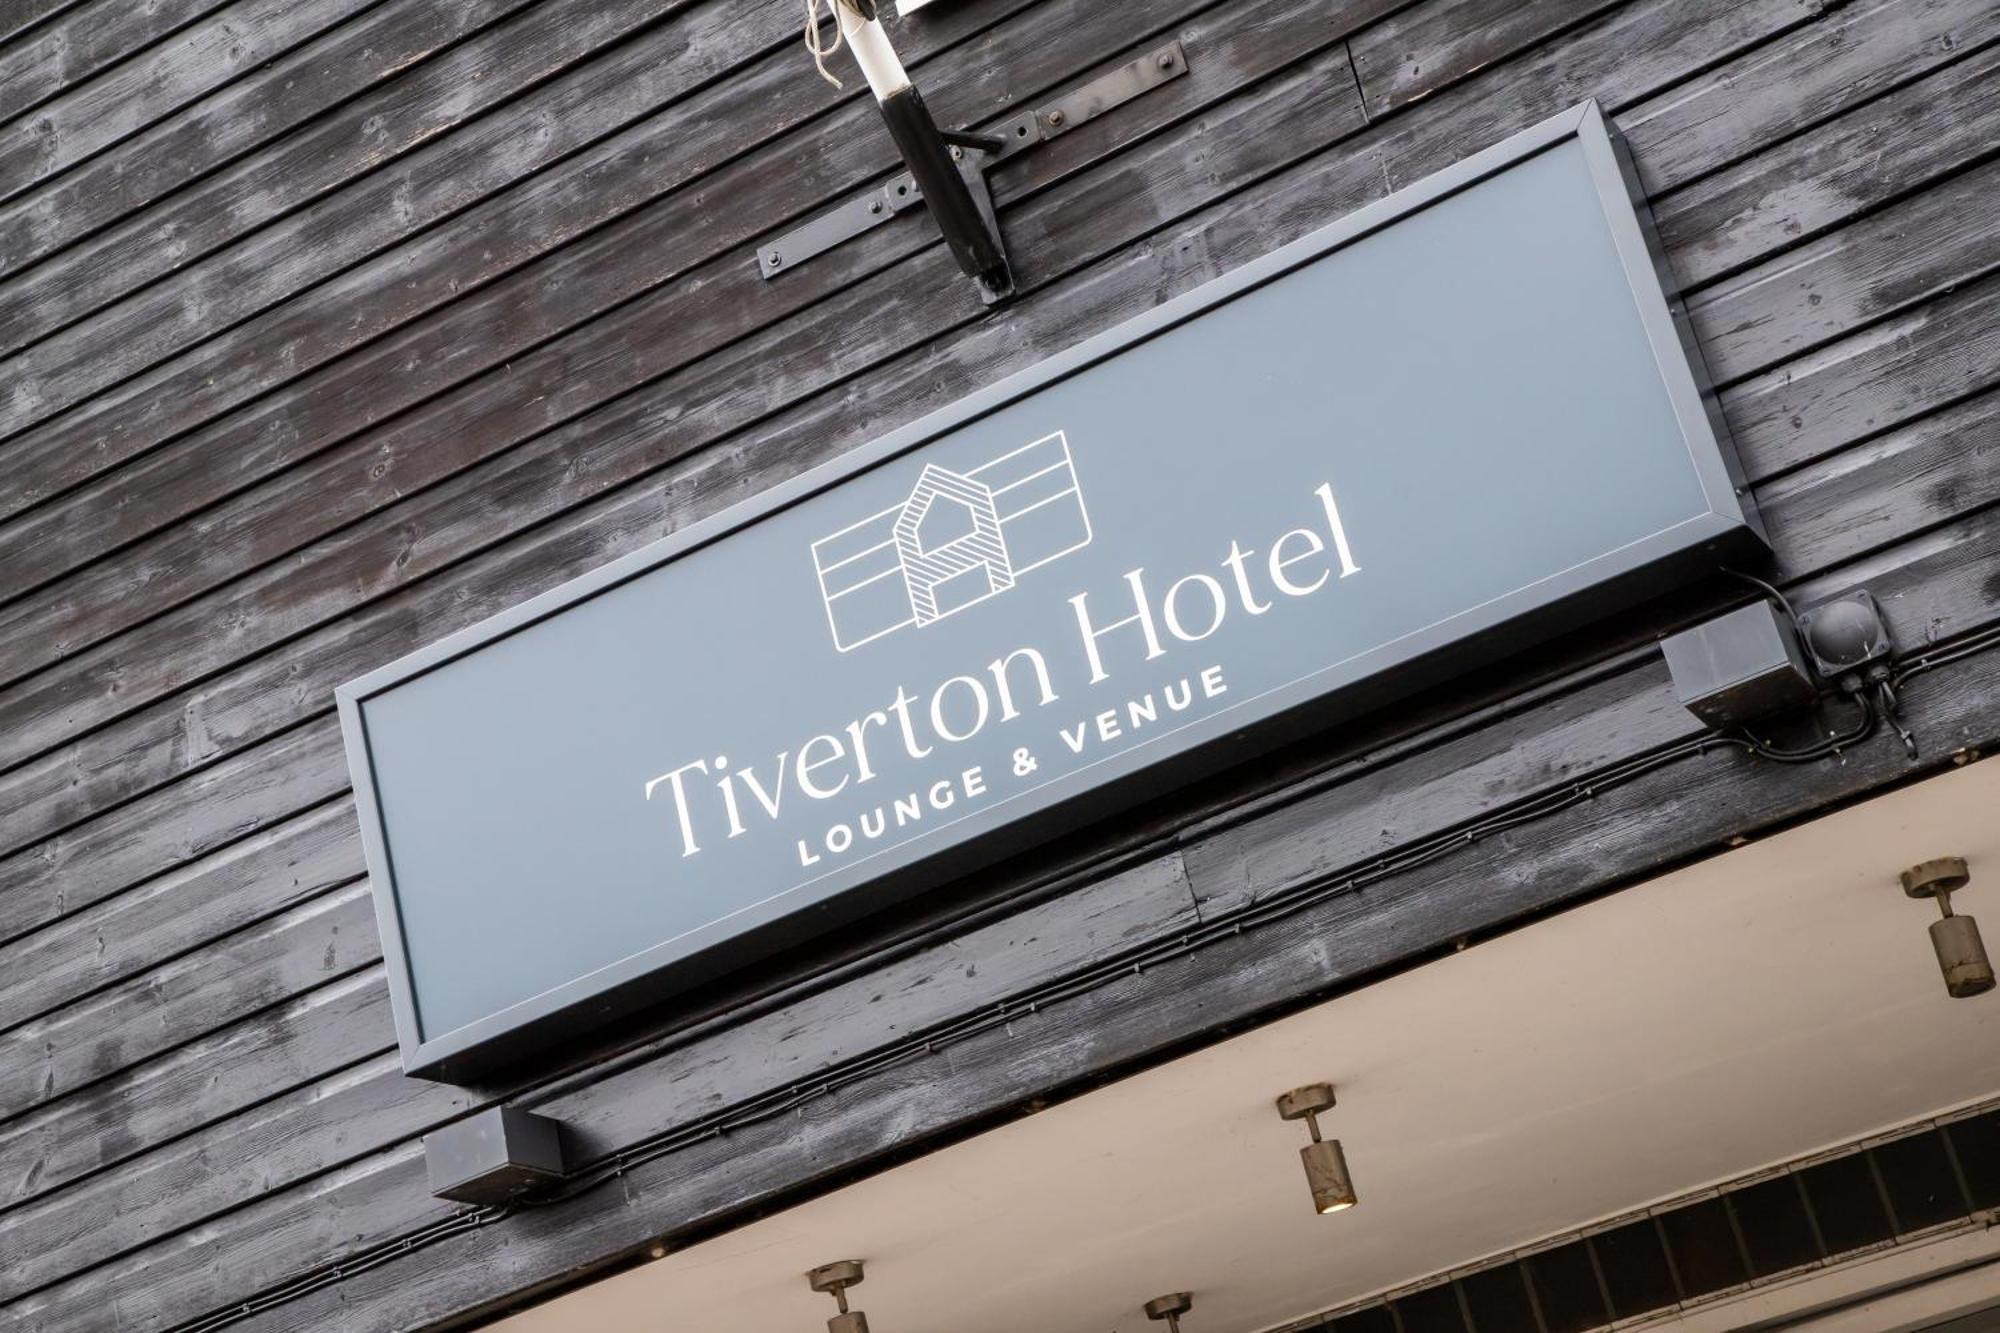 Tiverton Hotel Lounge & Venue Formally Best Western Exterior foto